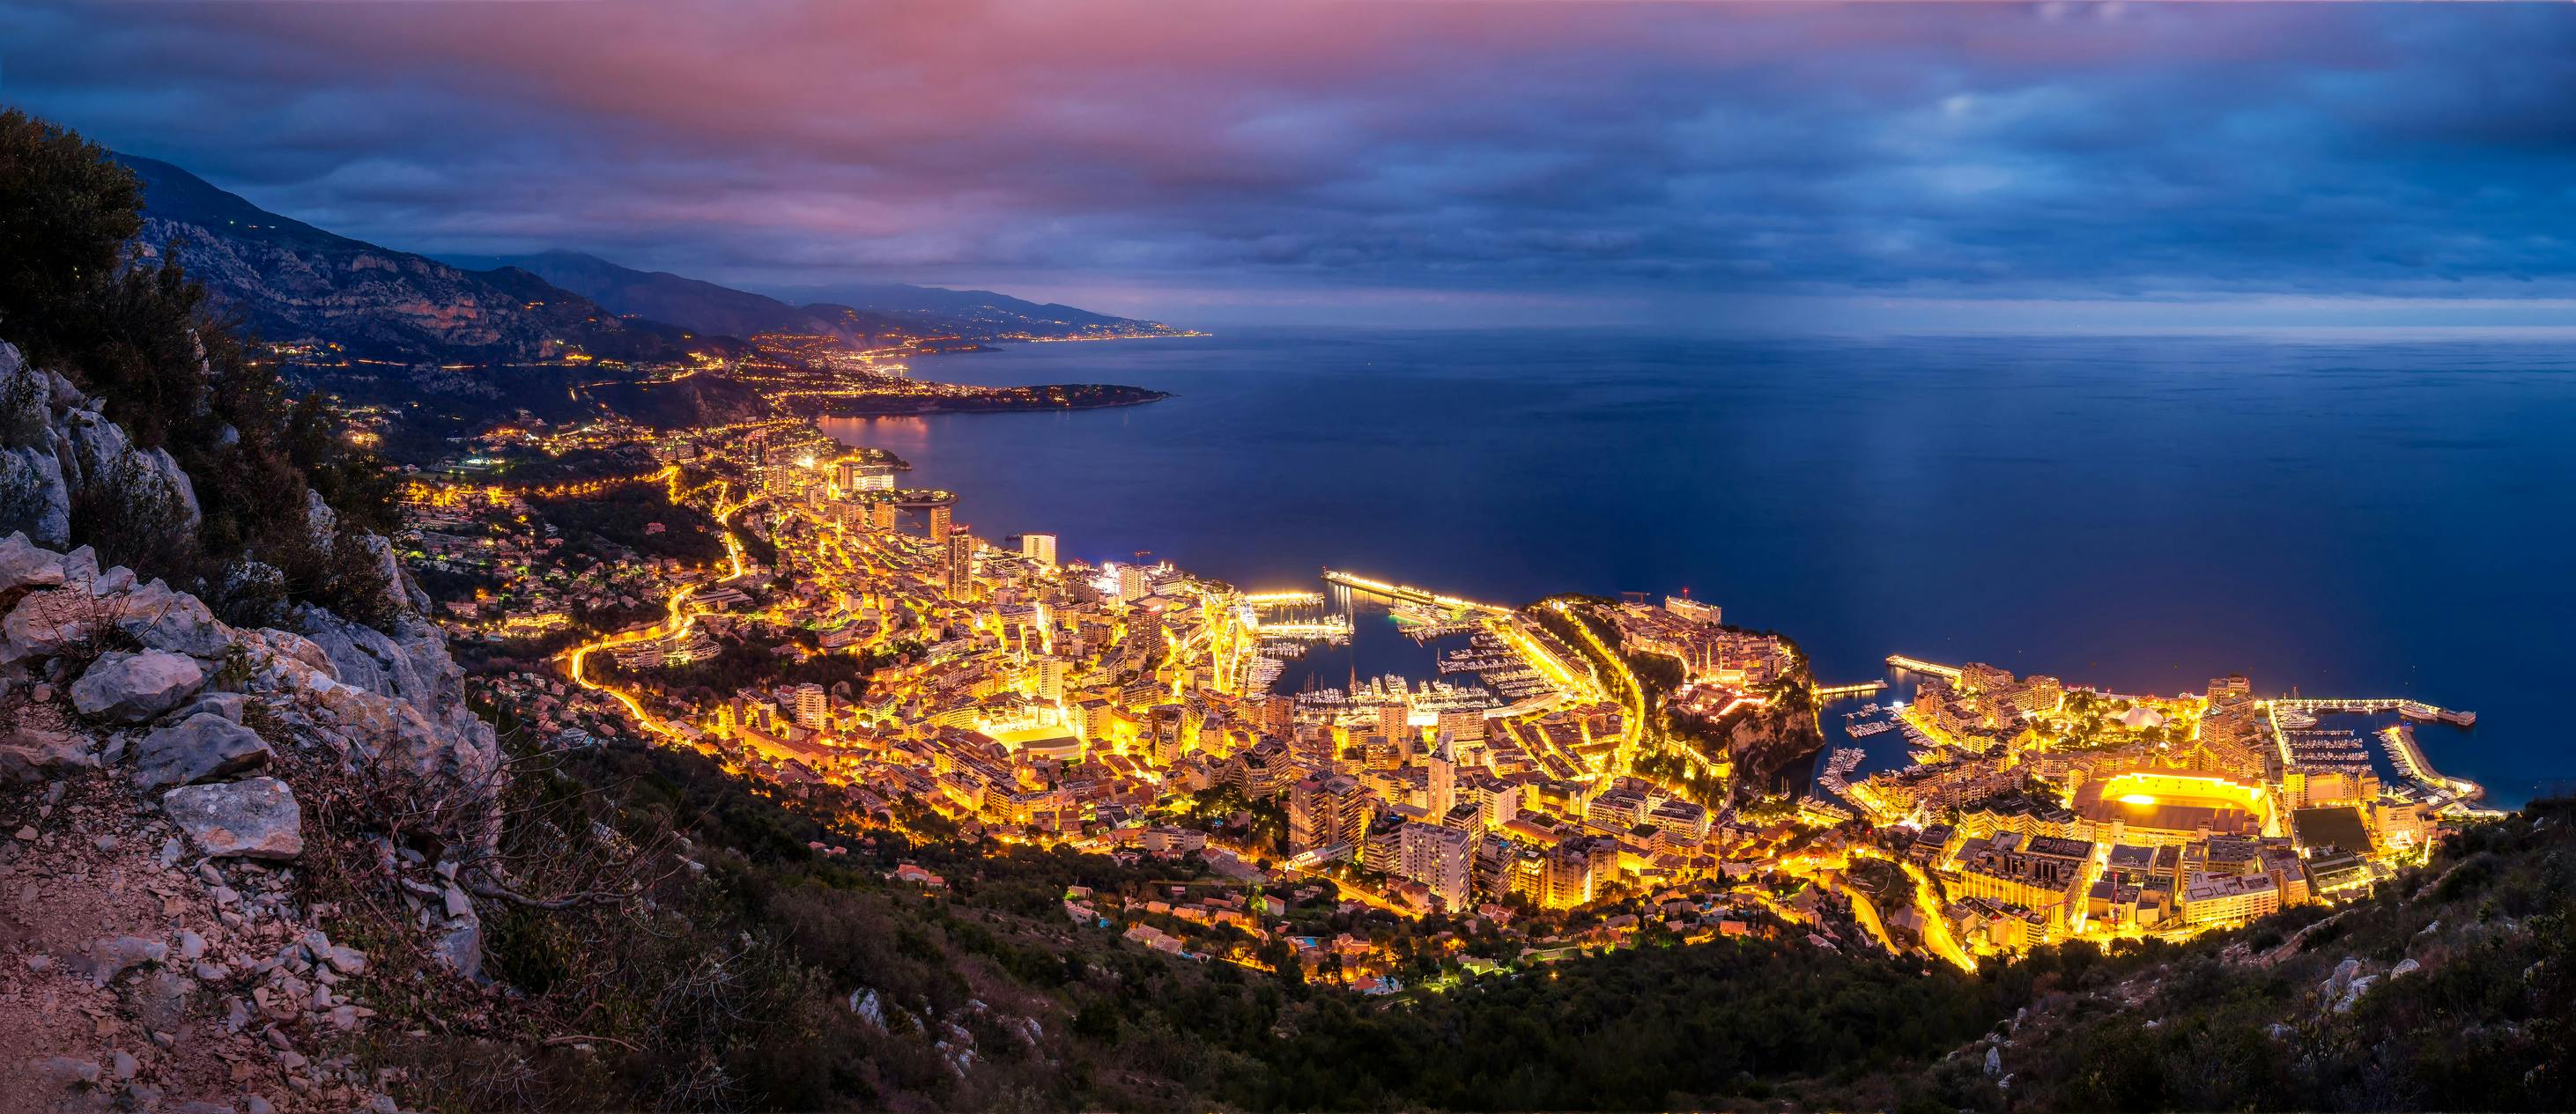 Private tour of Monaco and Monte-Carlo by night